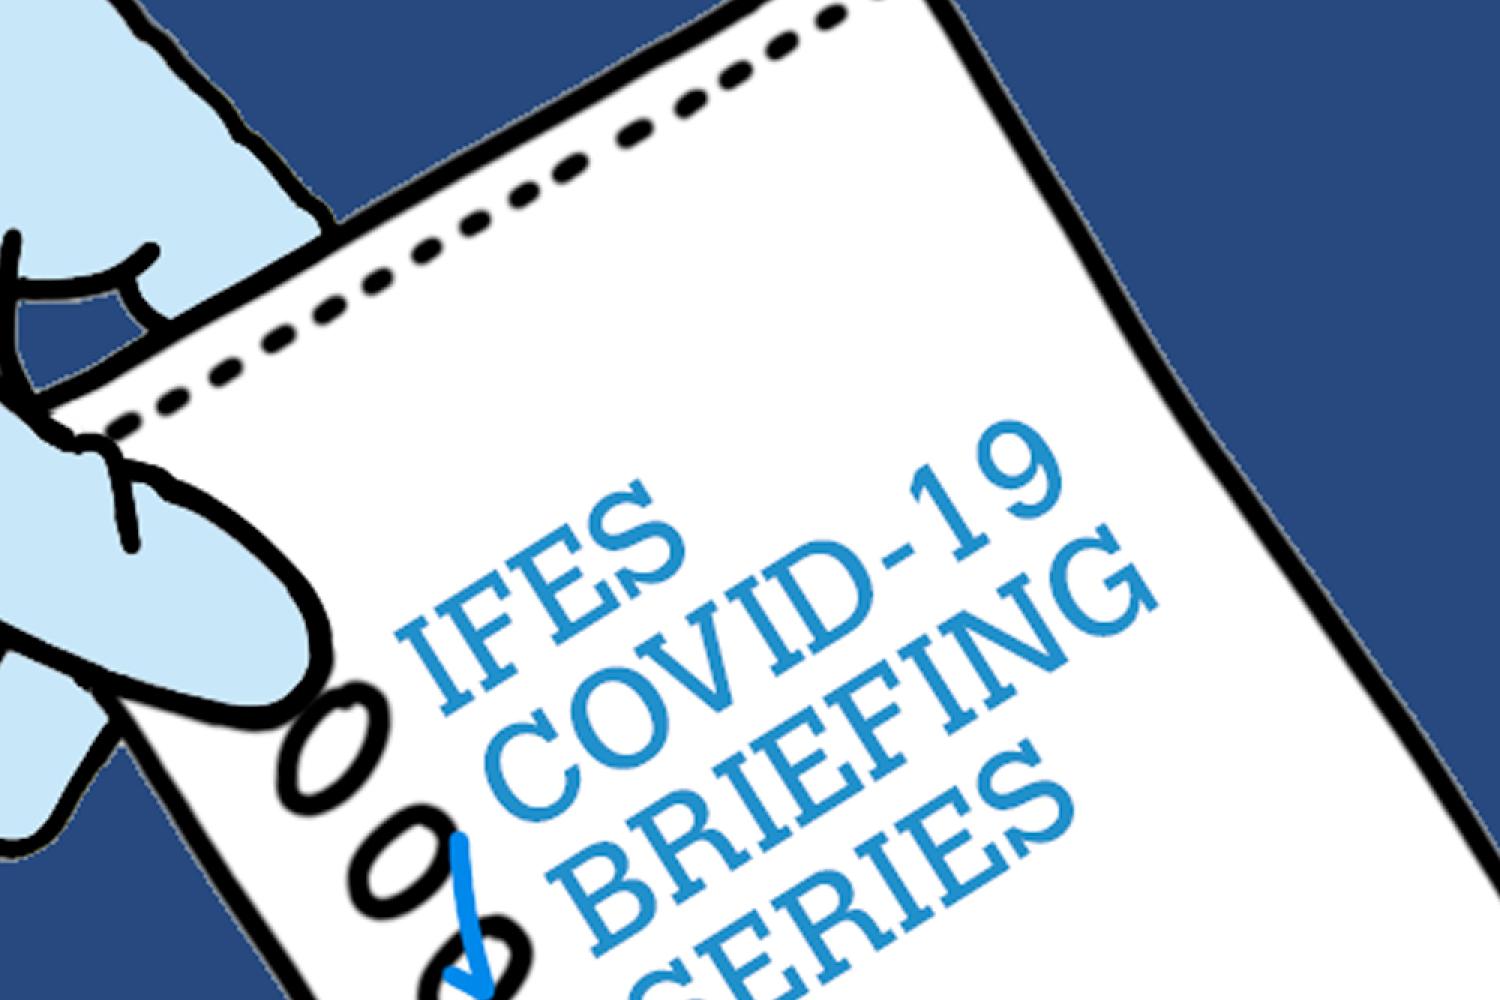 IFES Covid 19 Briefing Series Program Logo